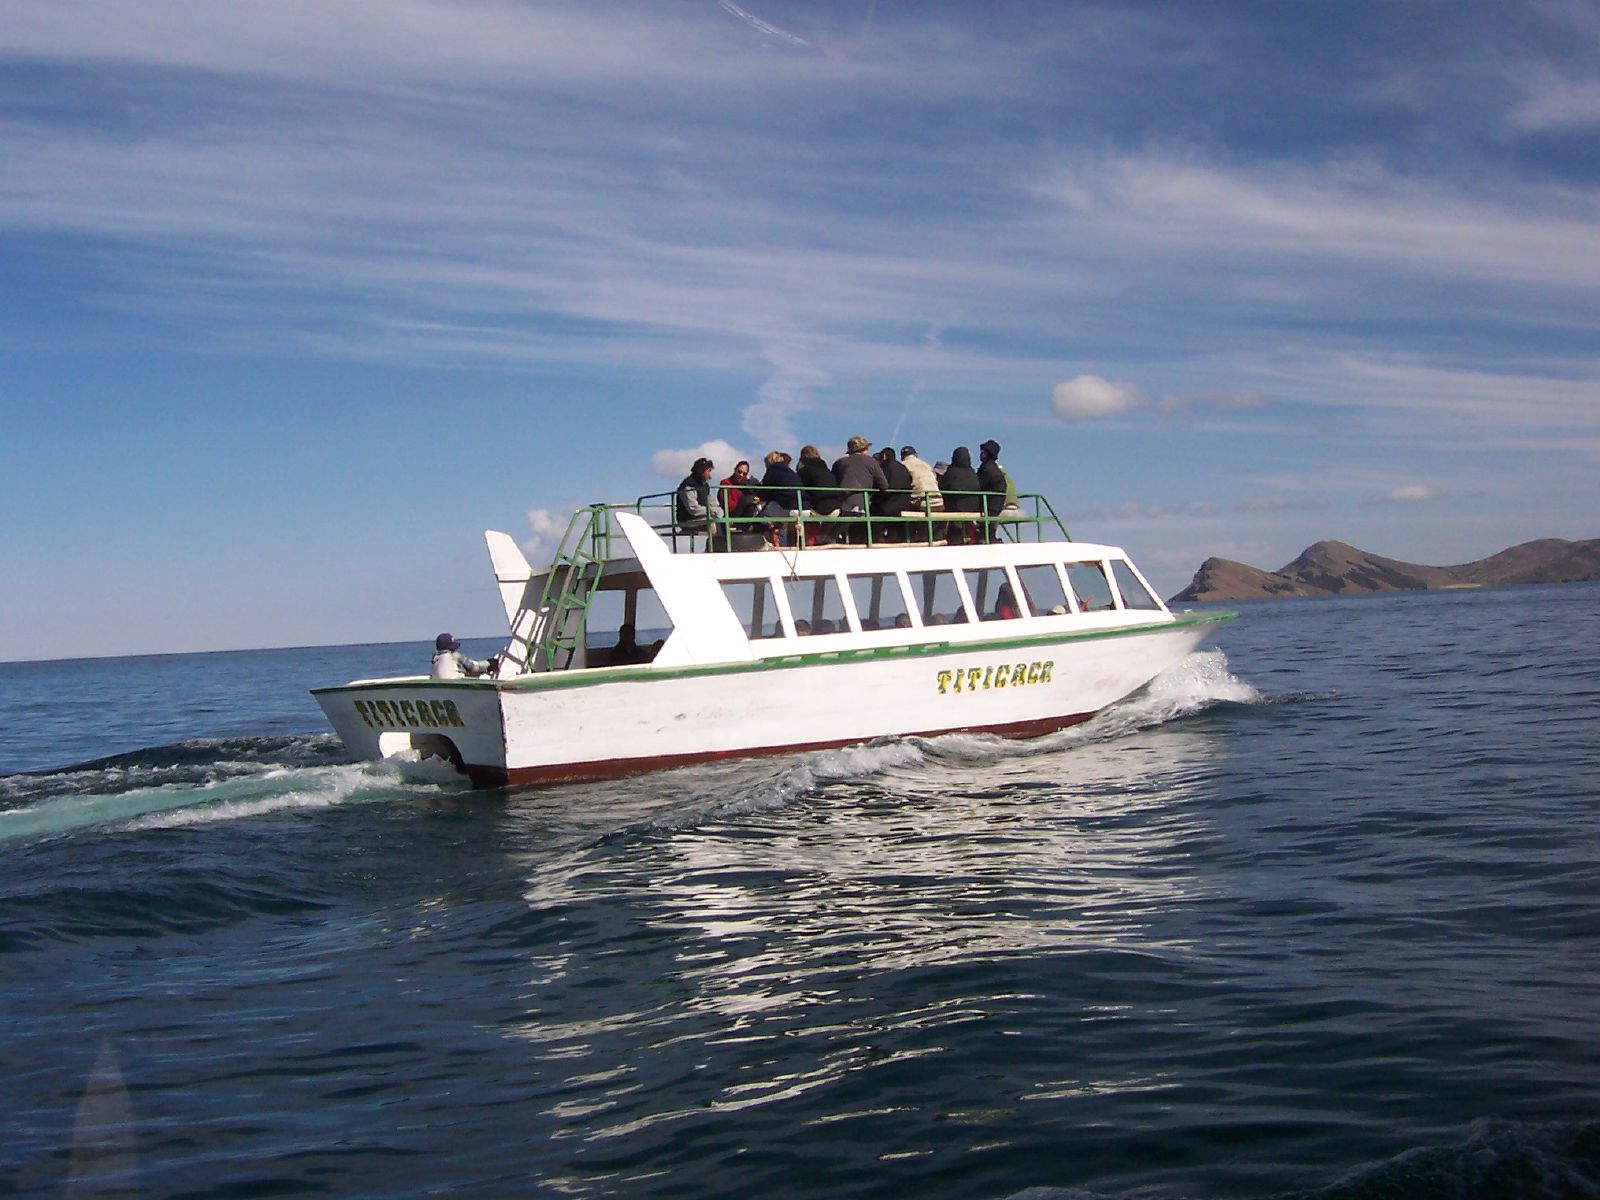 File:Titicaca tourist boat.jpg - Wikimedia Commons